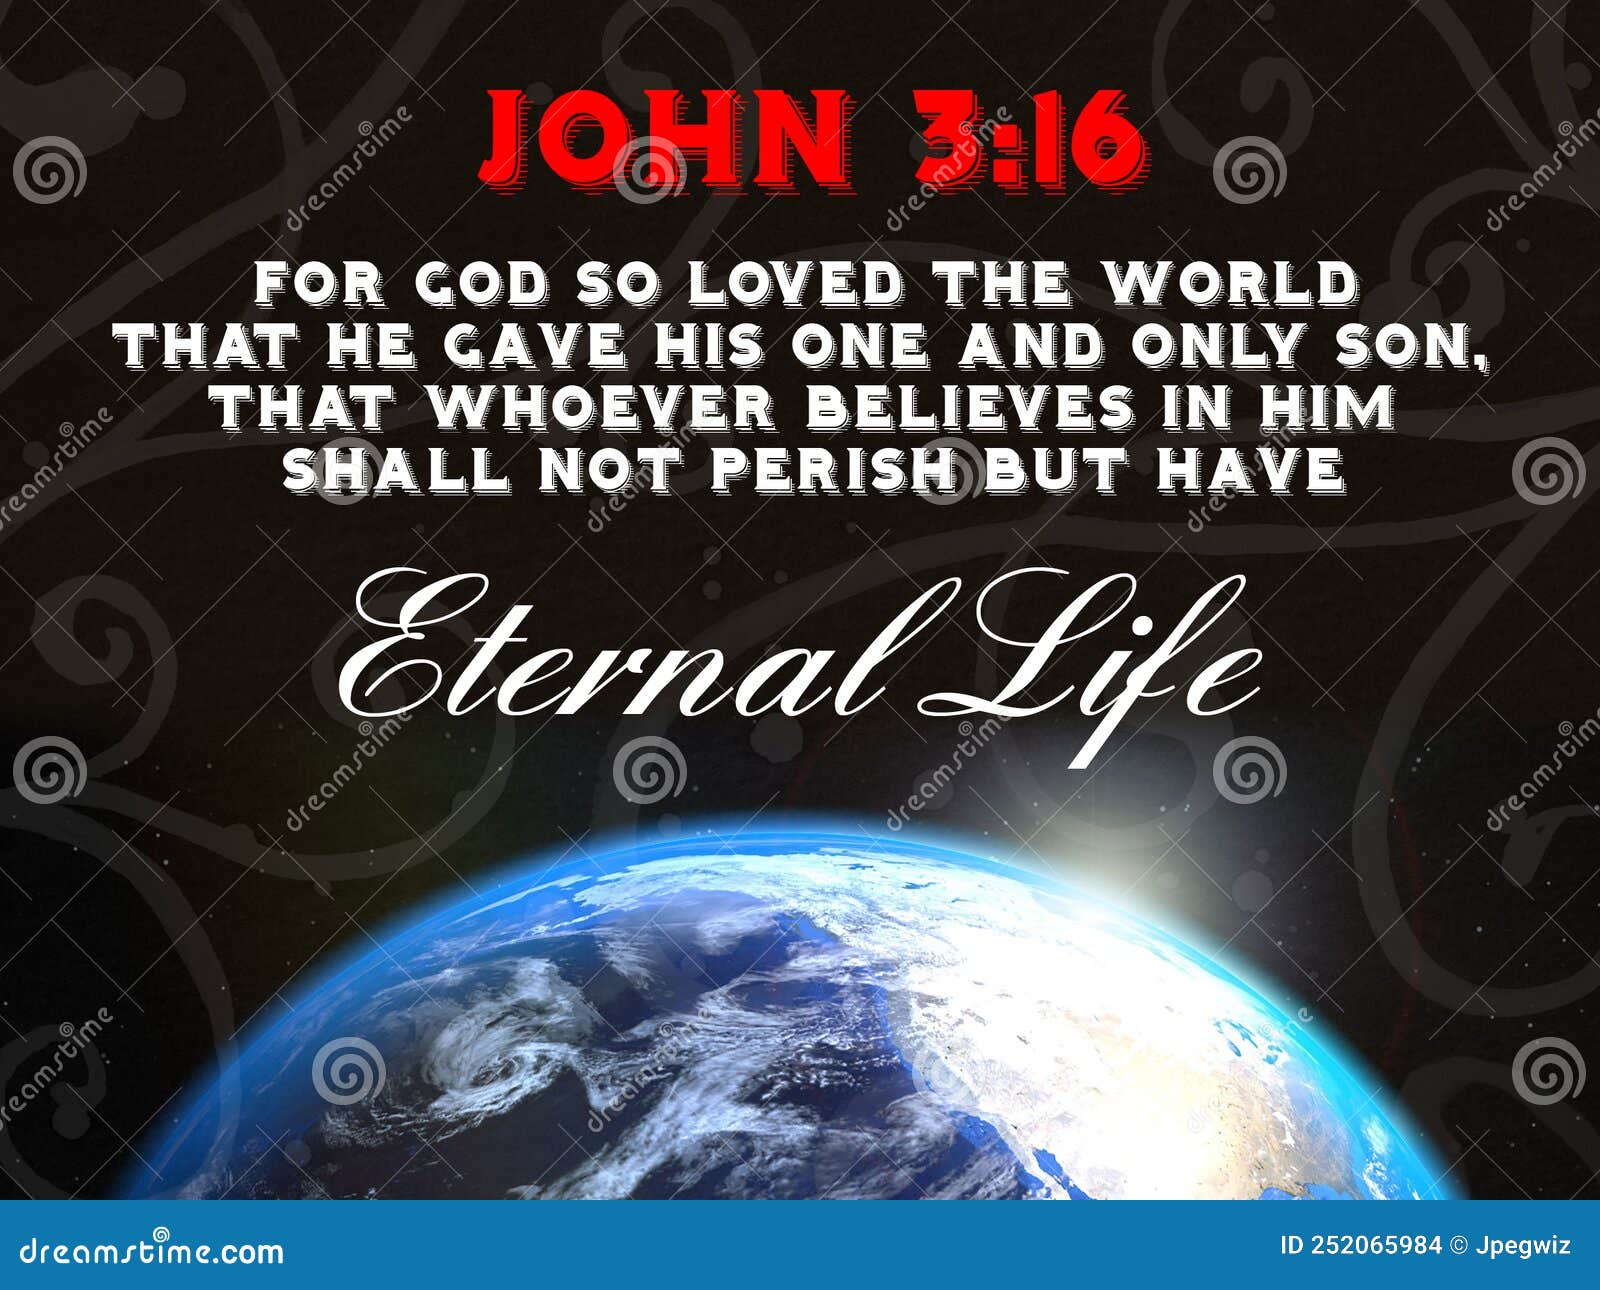 john 3:16 bible verse with earth